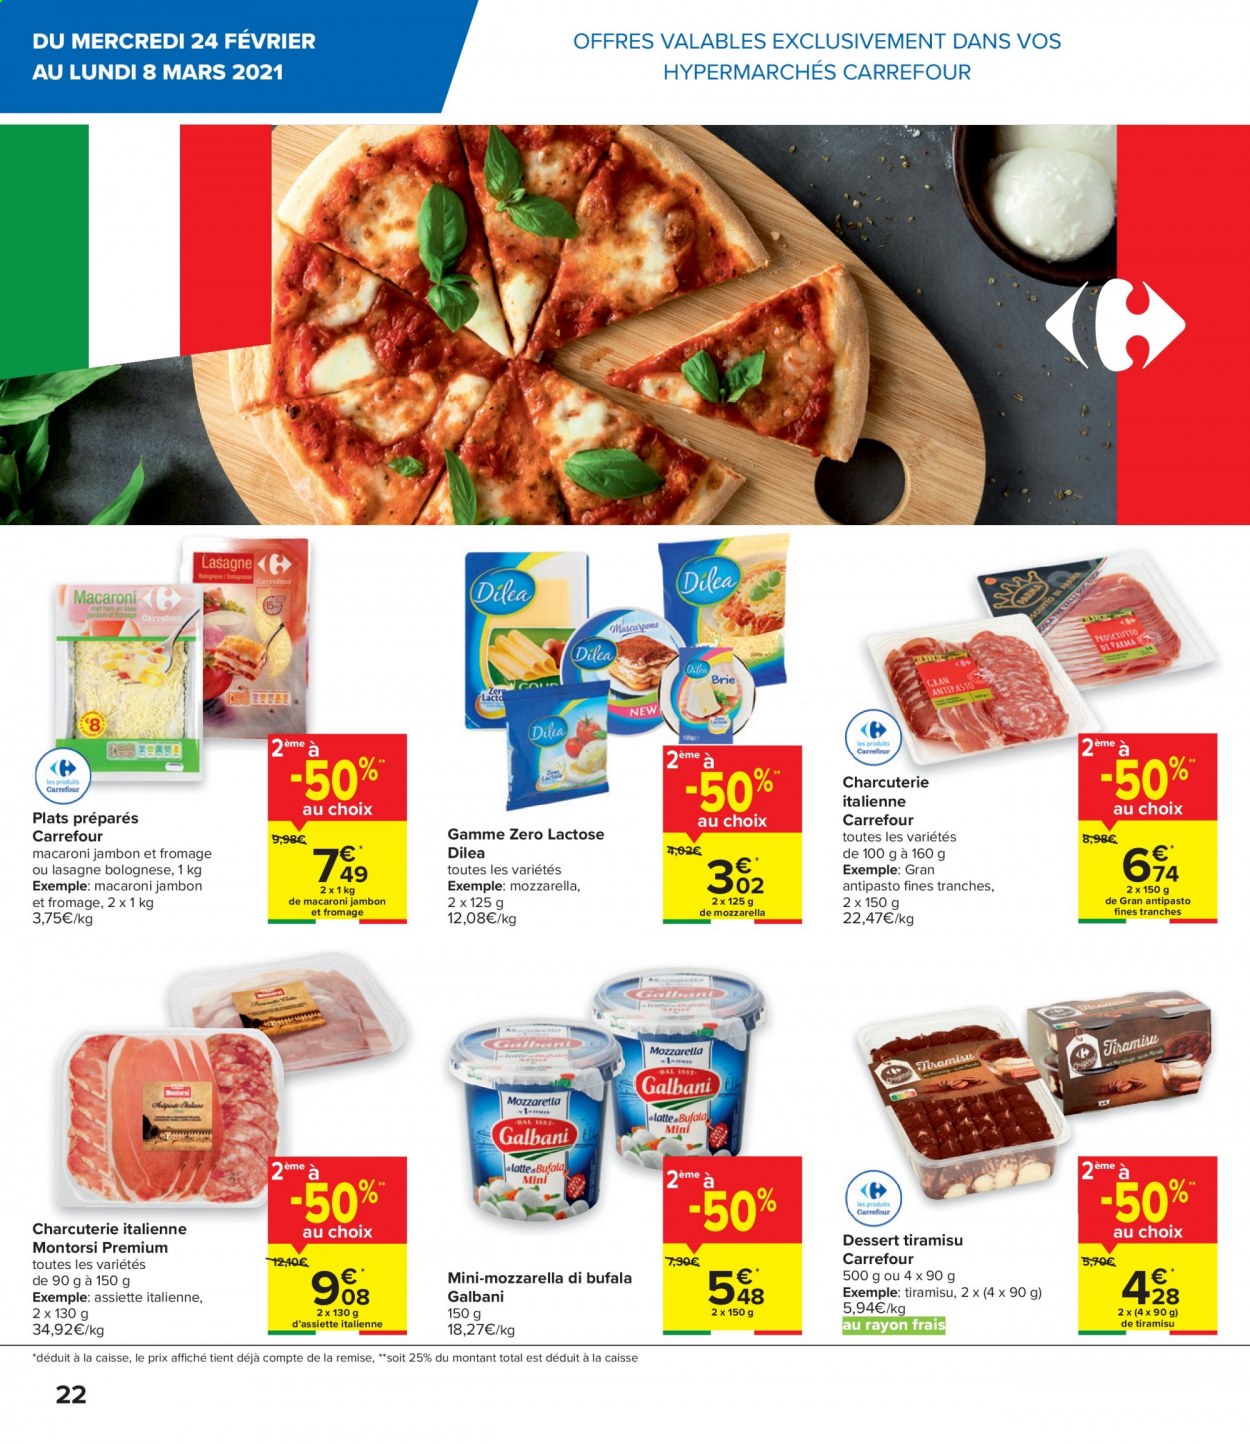 thumbnail - Carrefour hypermarkt-aanbieding - 24/02/2021 - 08/03/2021 -  producten in de aanbieding - lasagne, macaroni, mozzarella. Pagina 2.